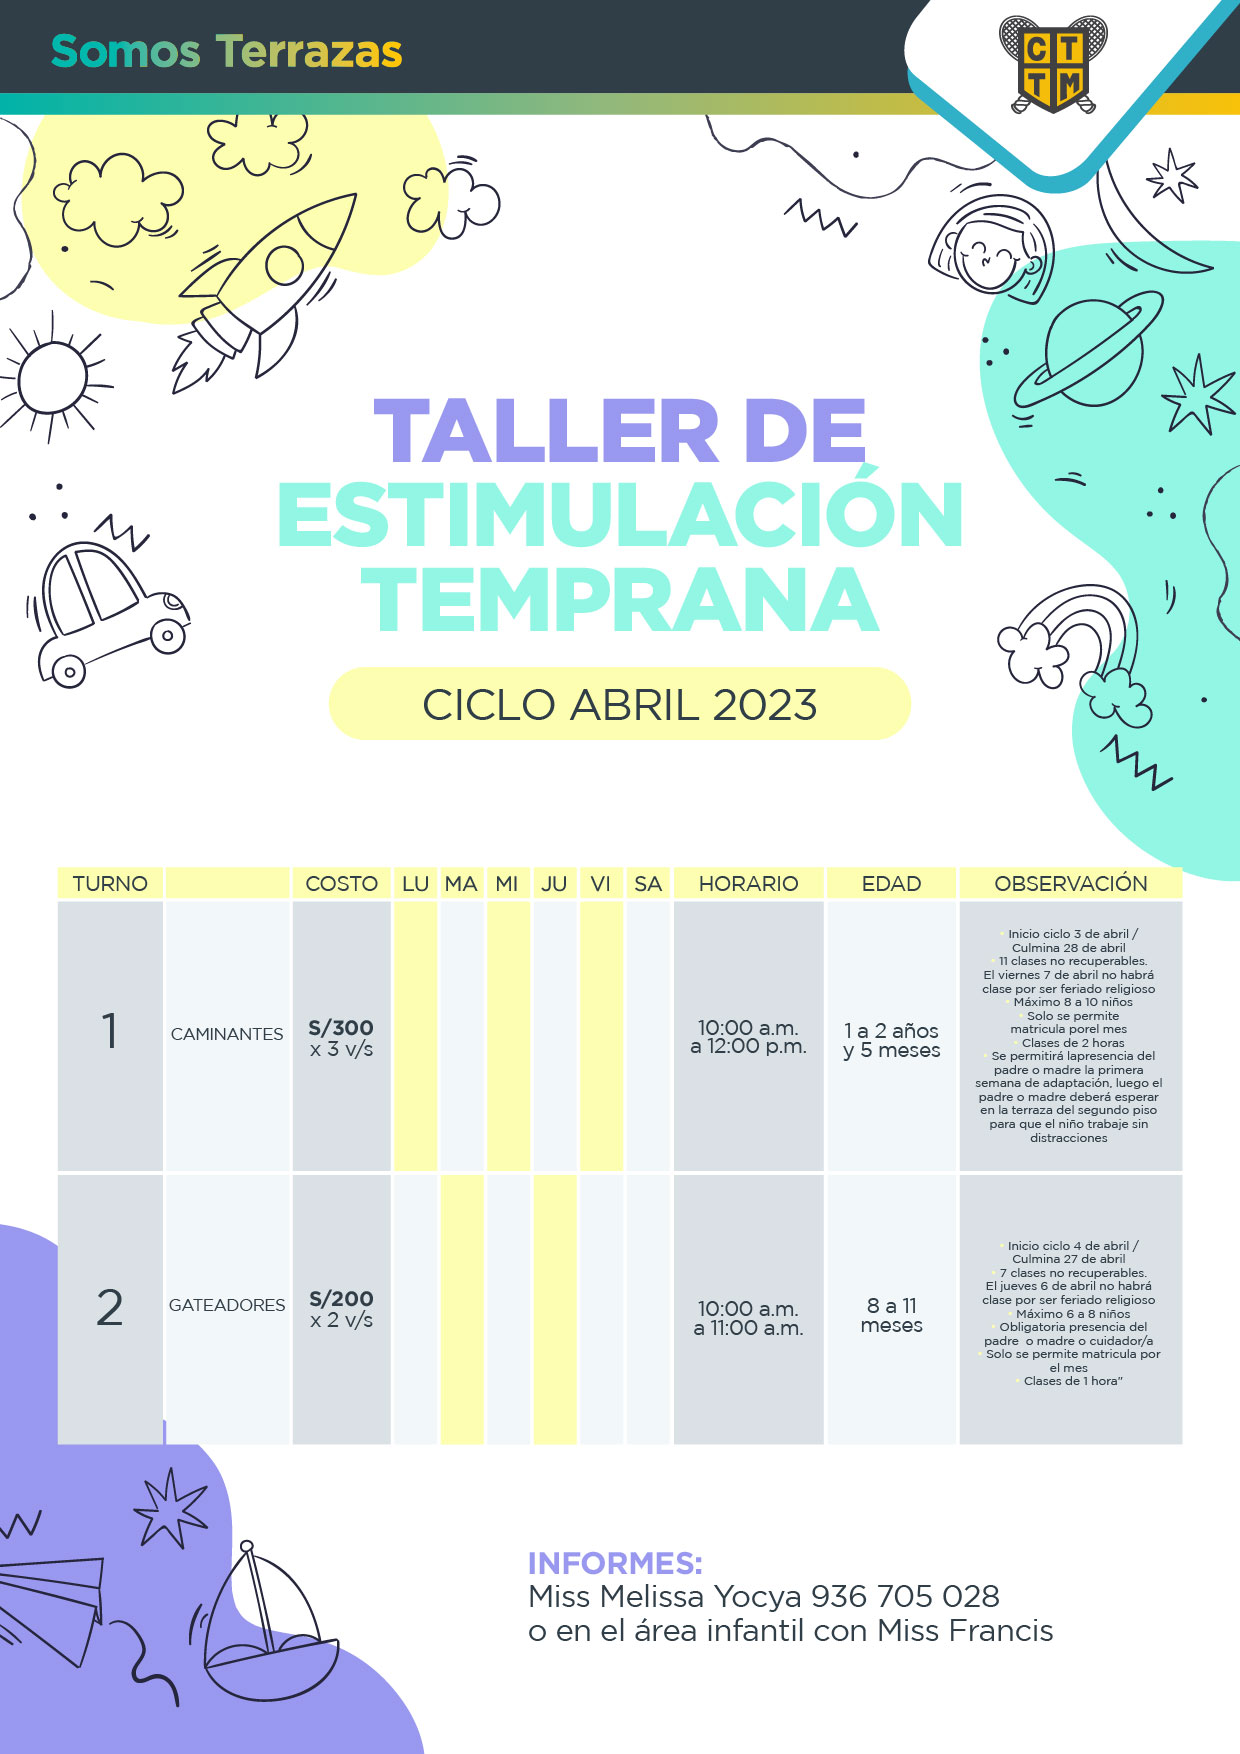 TALLER DE ESTIMULACIÓN TEMPRANA - CICLO REGULAR ABRIL 2023